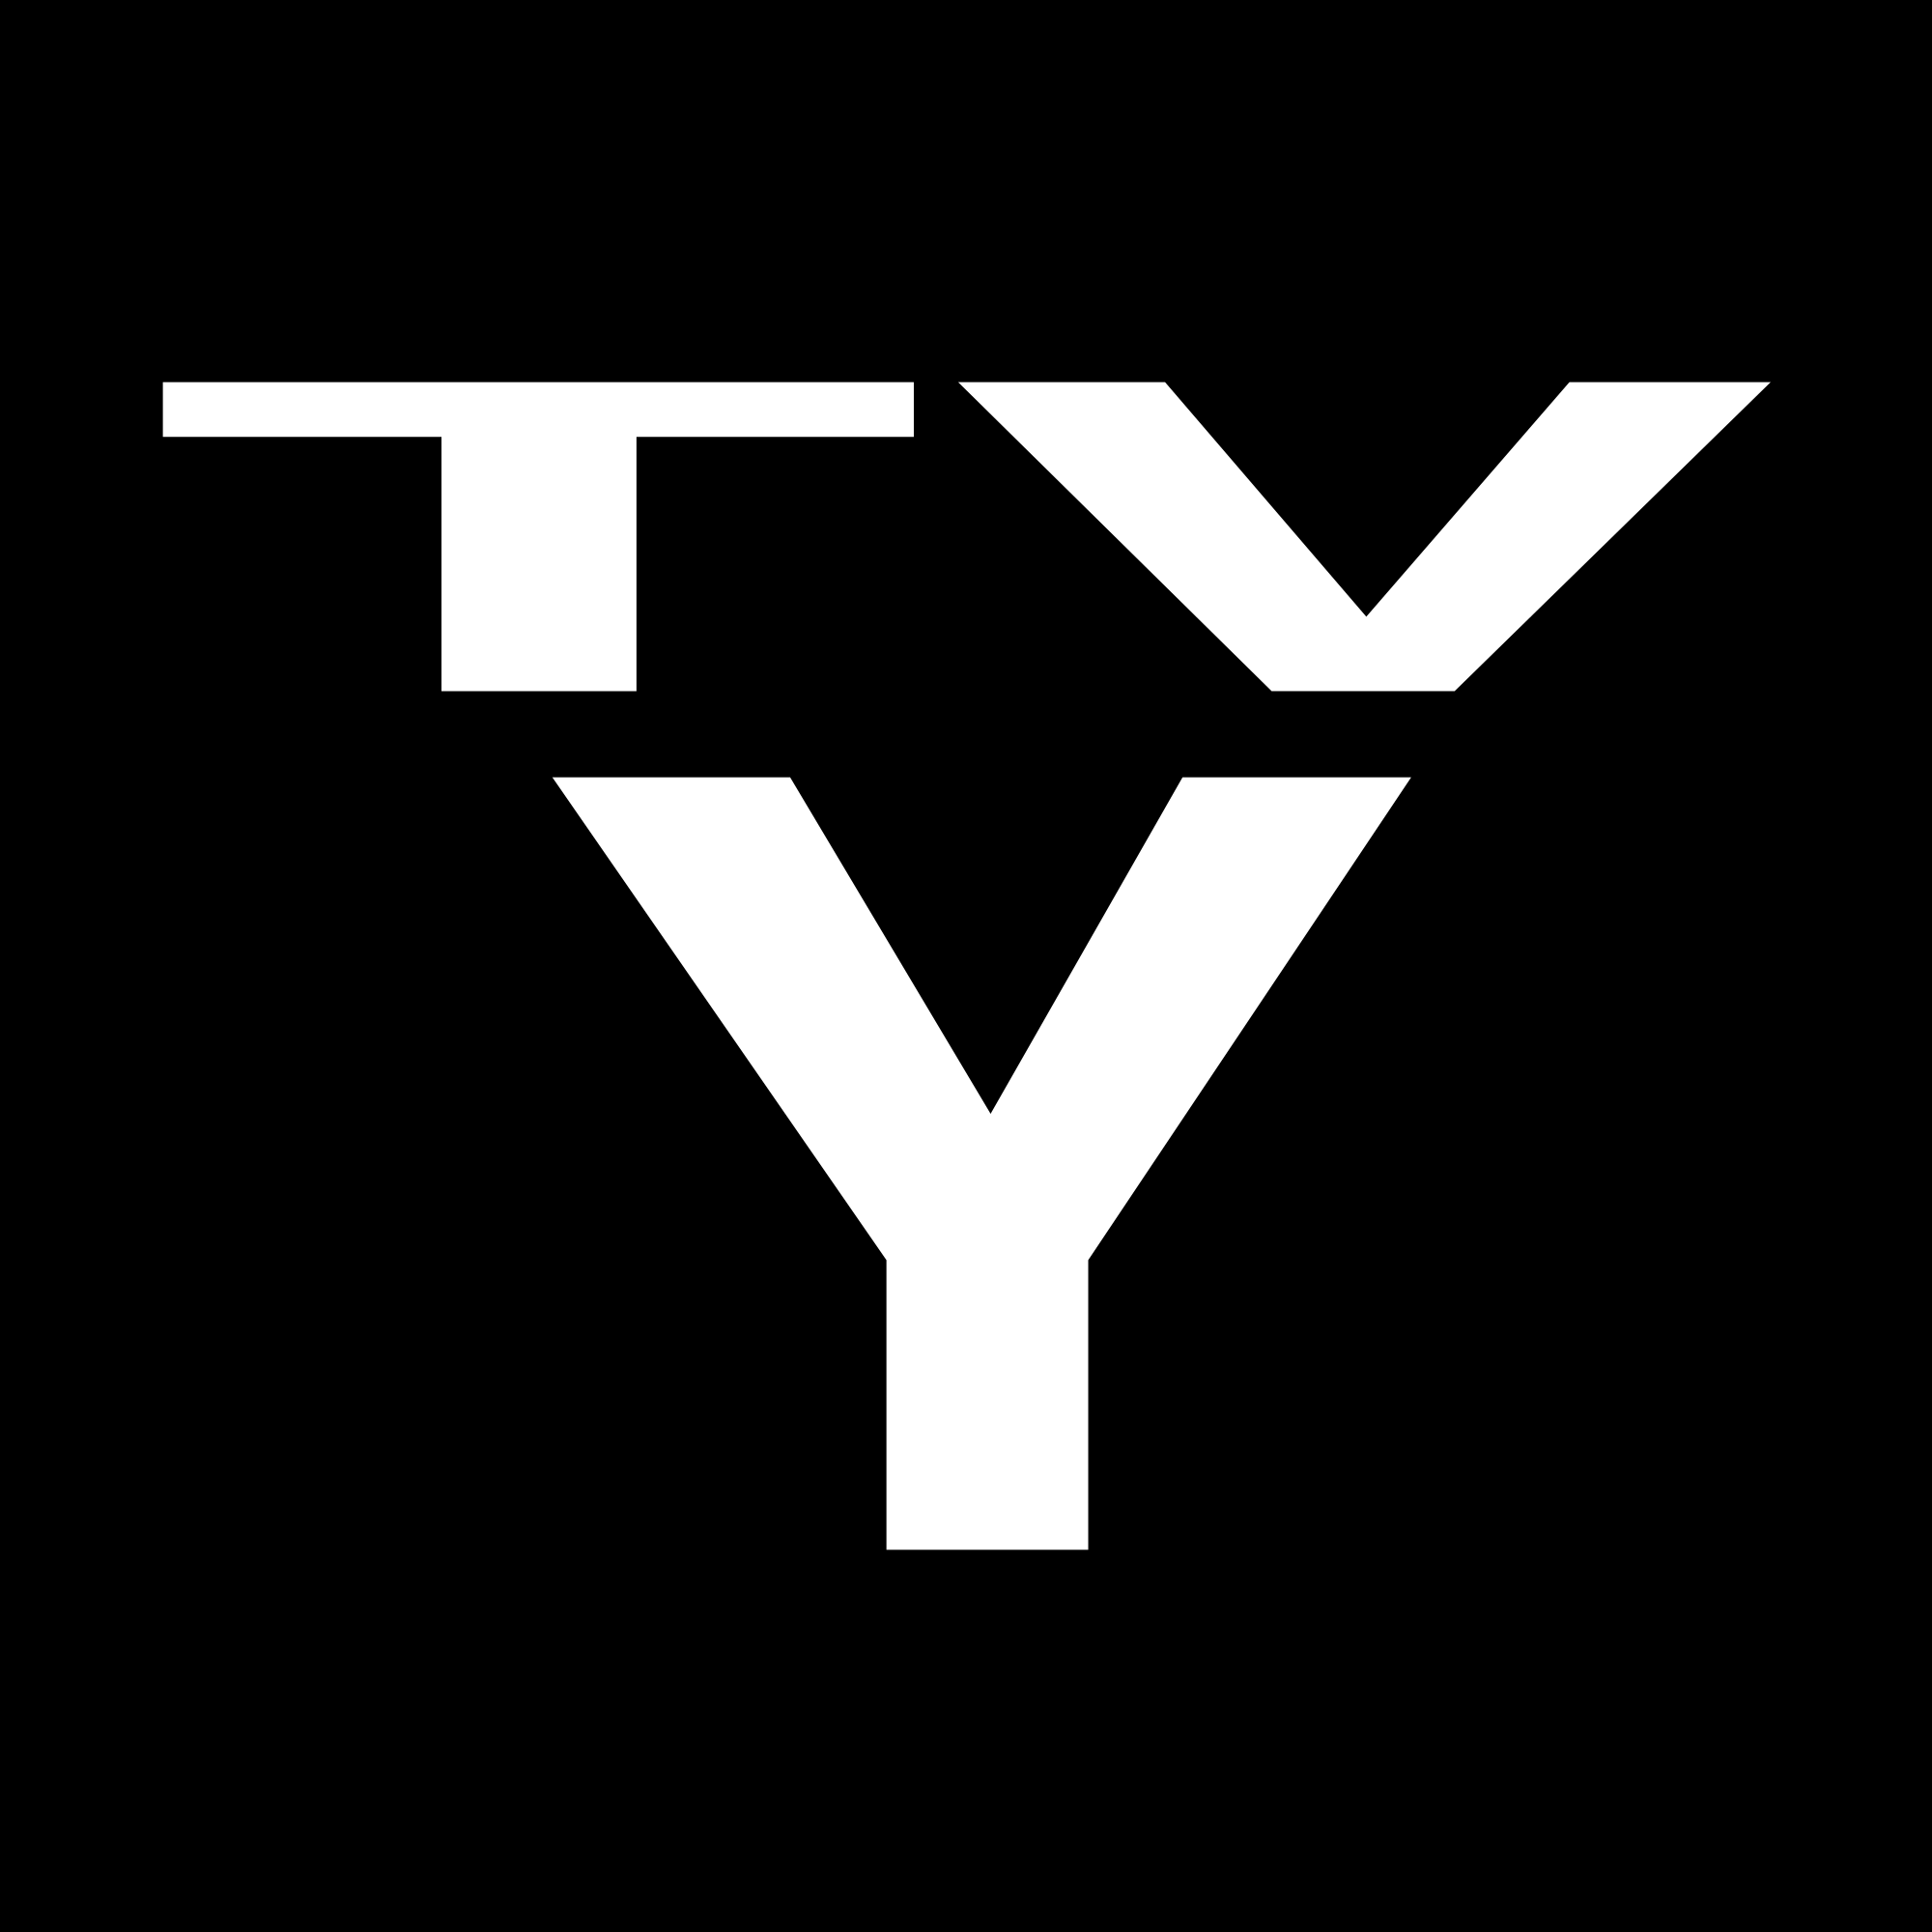 TV Y CC Logo - File:TV-Y icon.svg - Wikimedia Commons